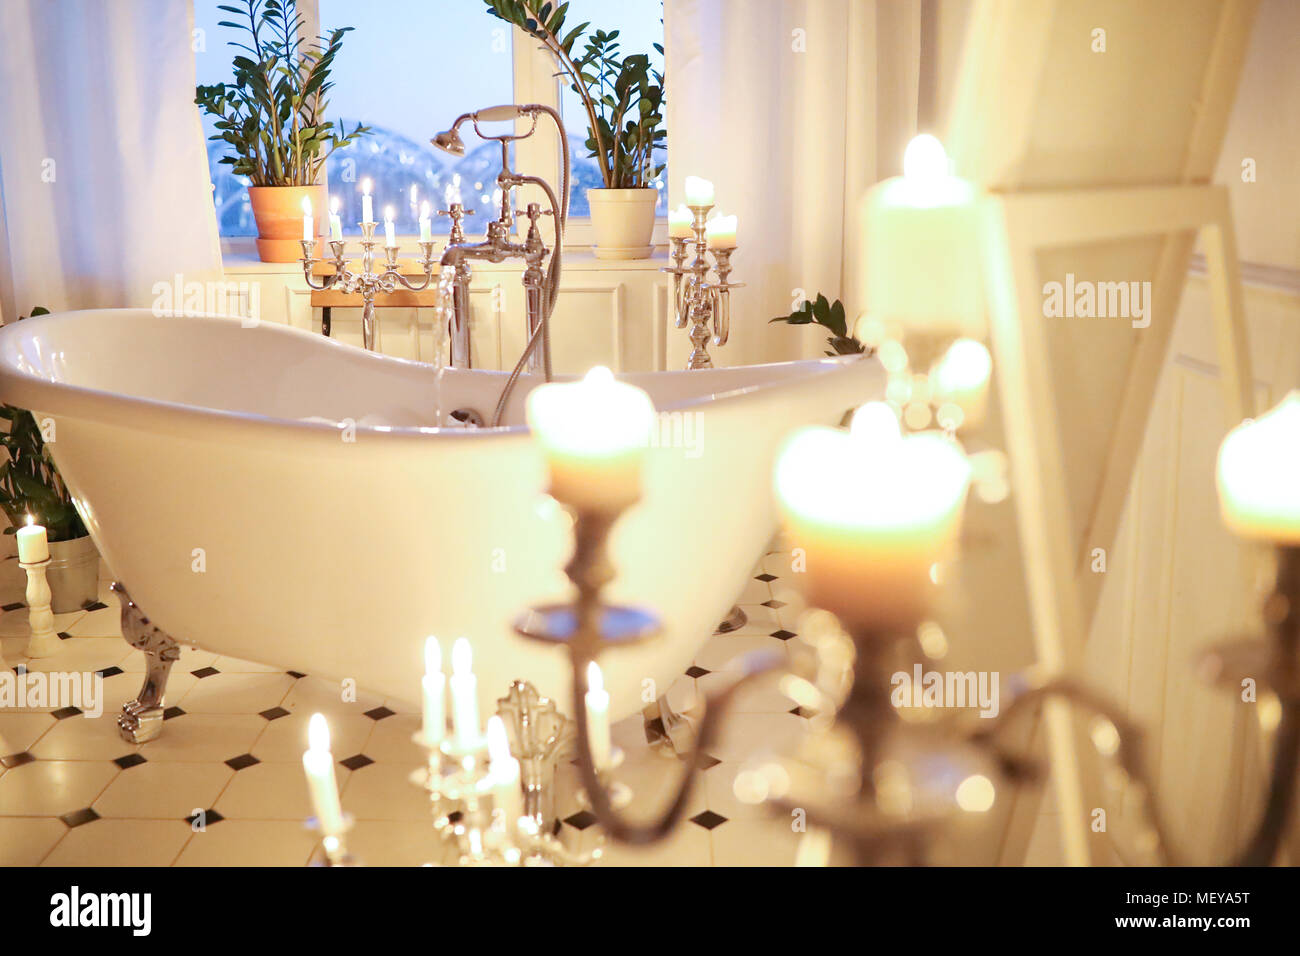 romantic bathtub  Romantic candles, Romantic bath, Romantic bathrooms